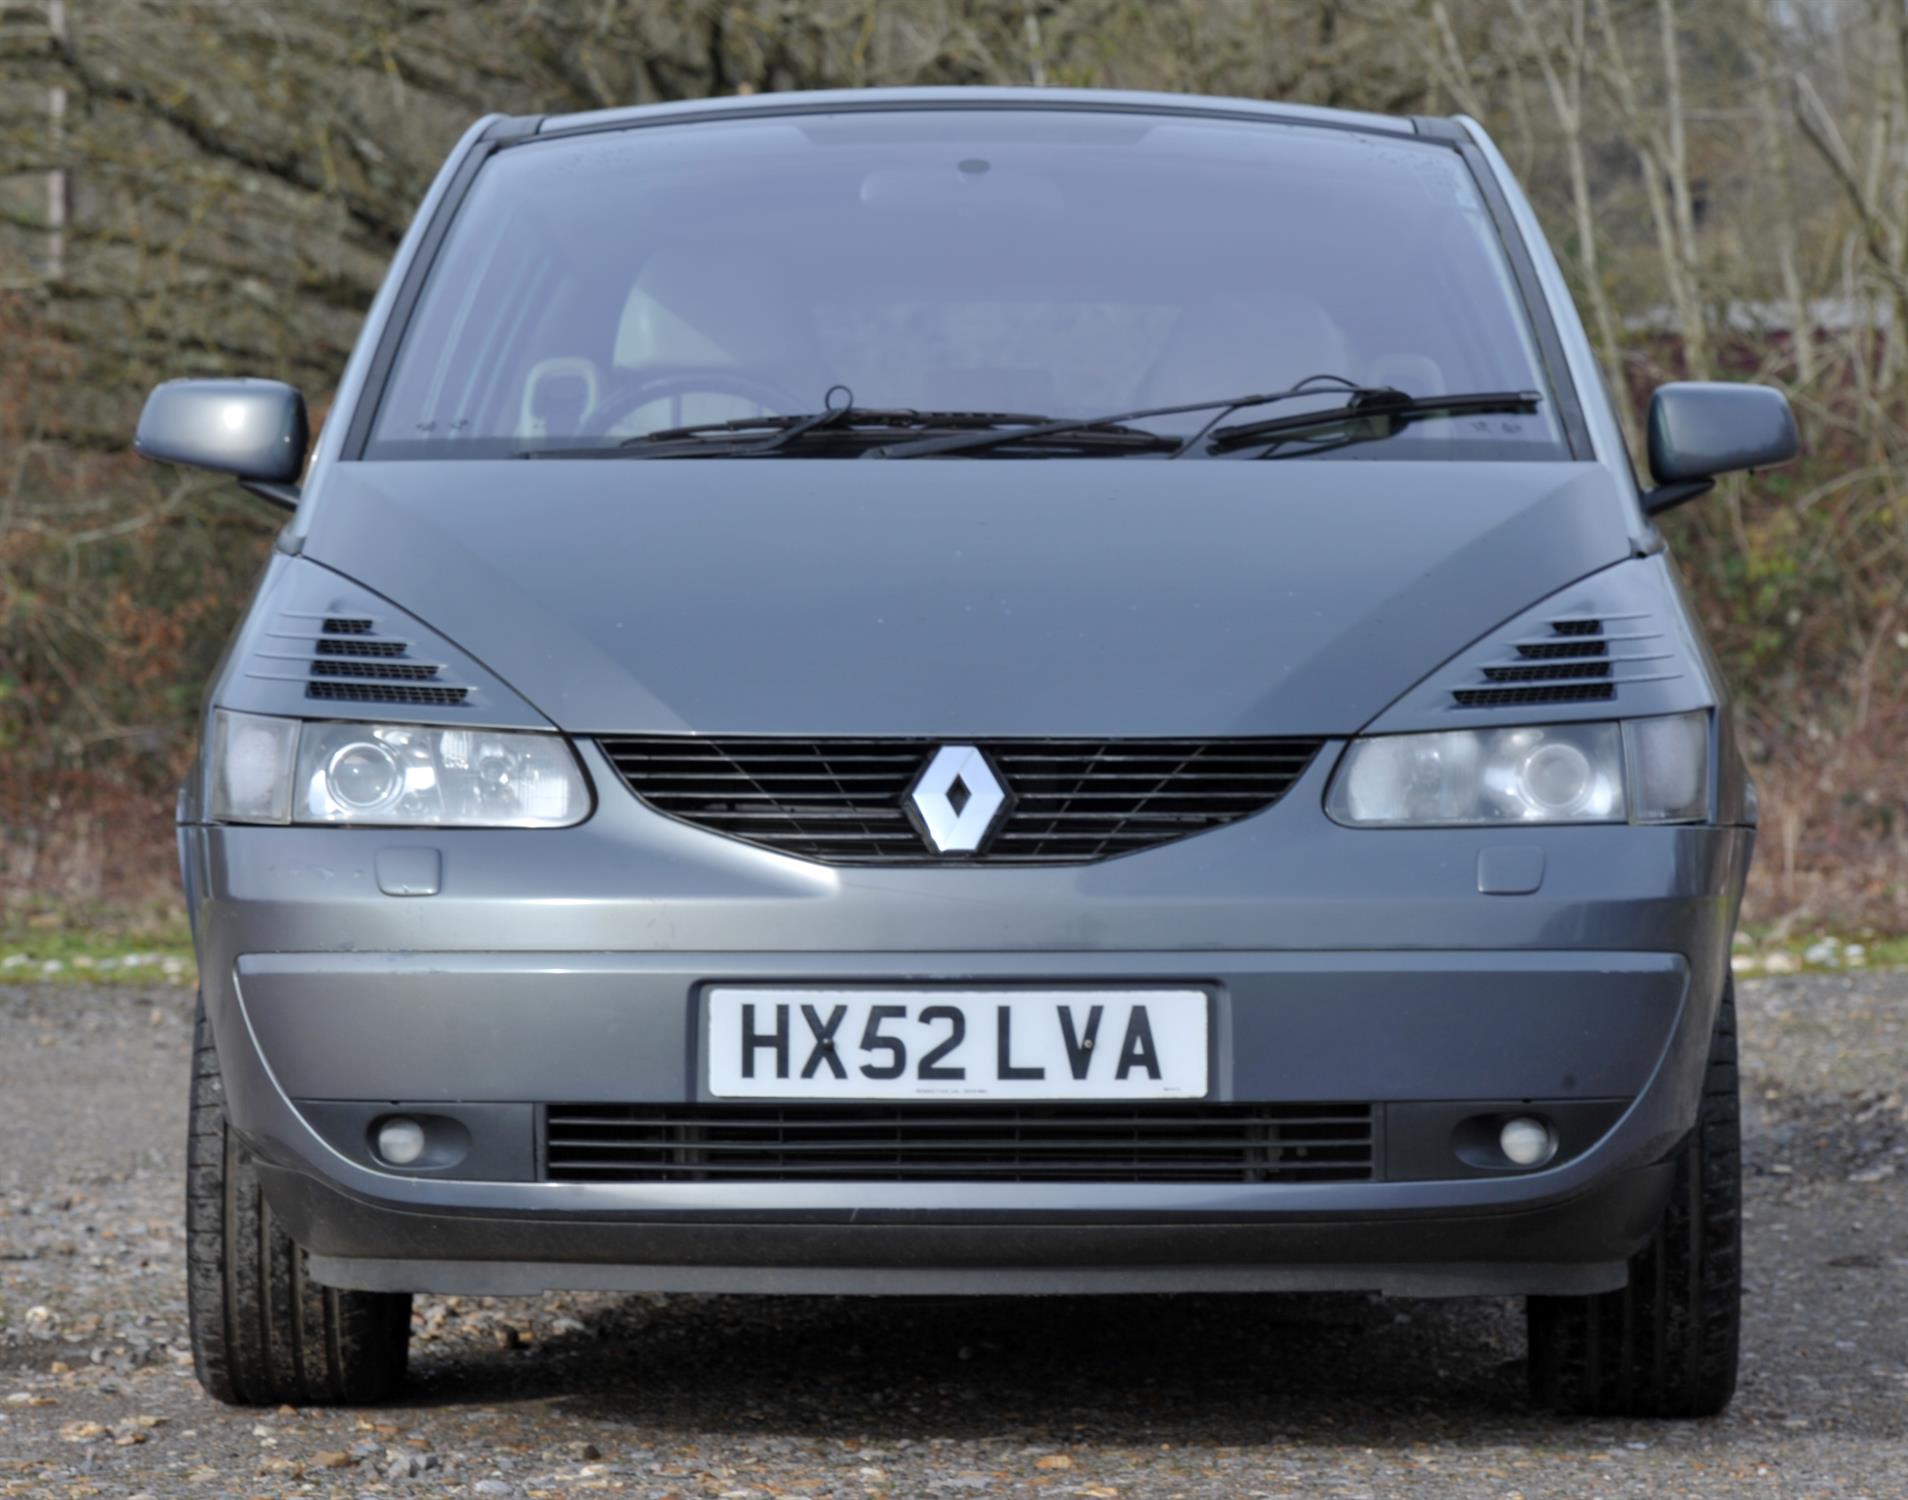 2002 Renault Avantime Dynamique. Registration number: HX52 LVA. Mileage: 143,666. - Image 2 of 12